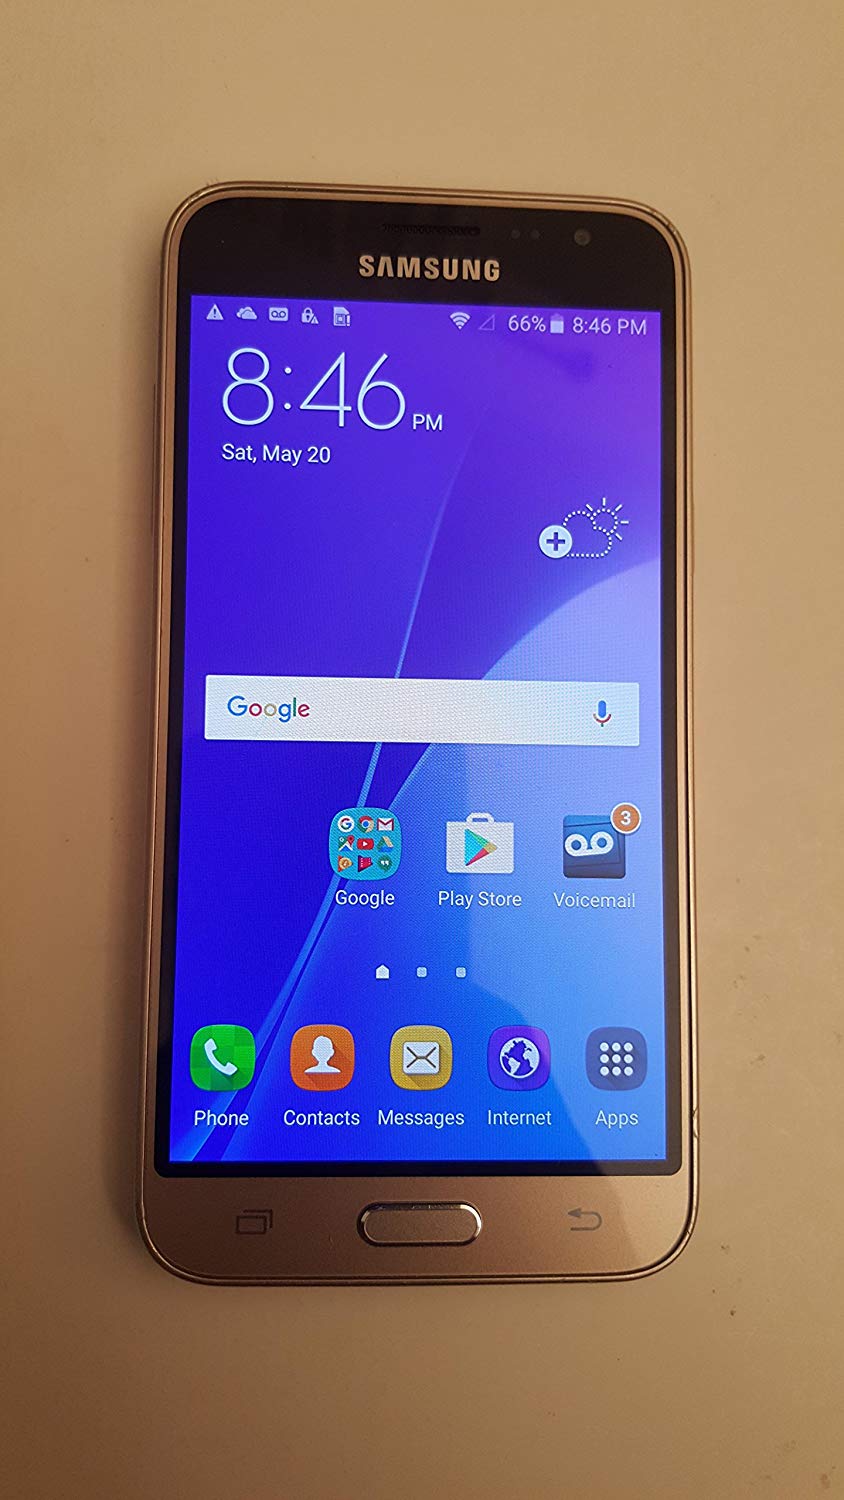 Samsung Galaxy J3 (2016) - No Contract Phone - Gold - (Virgin Mobile